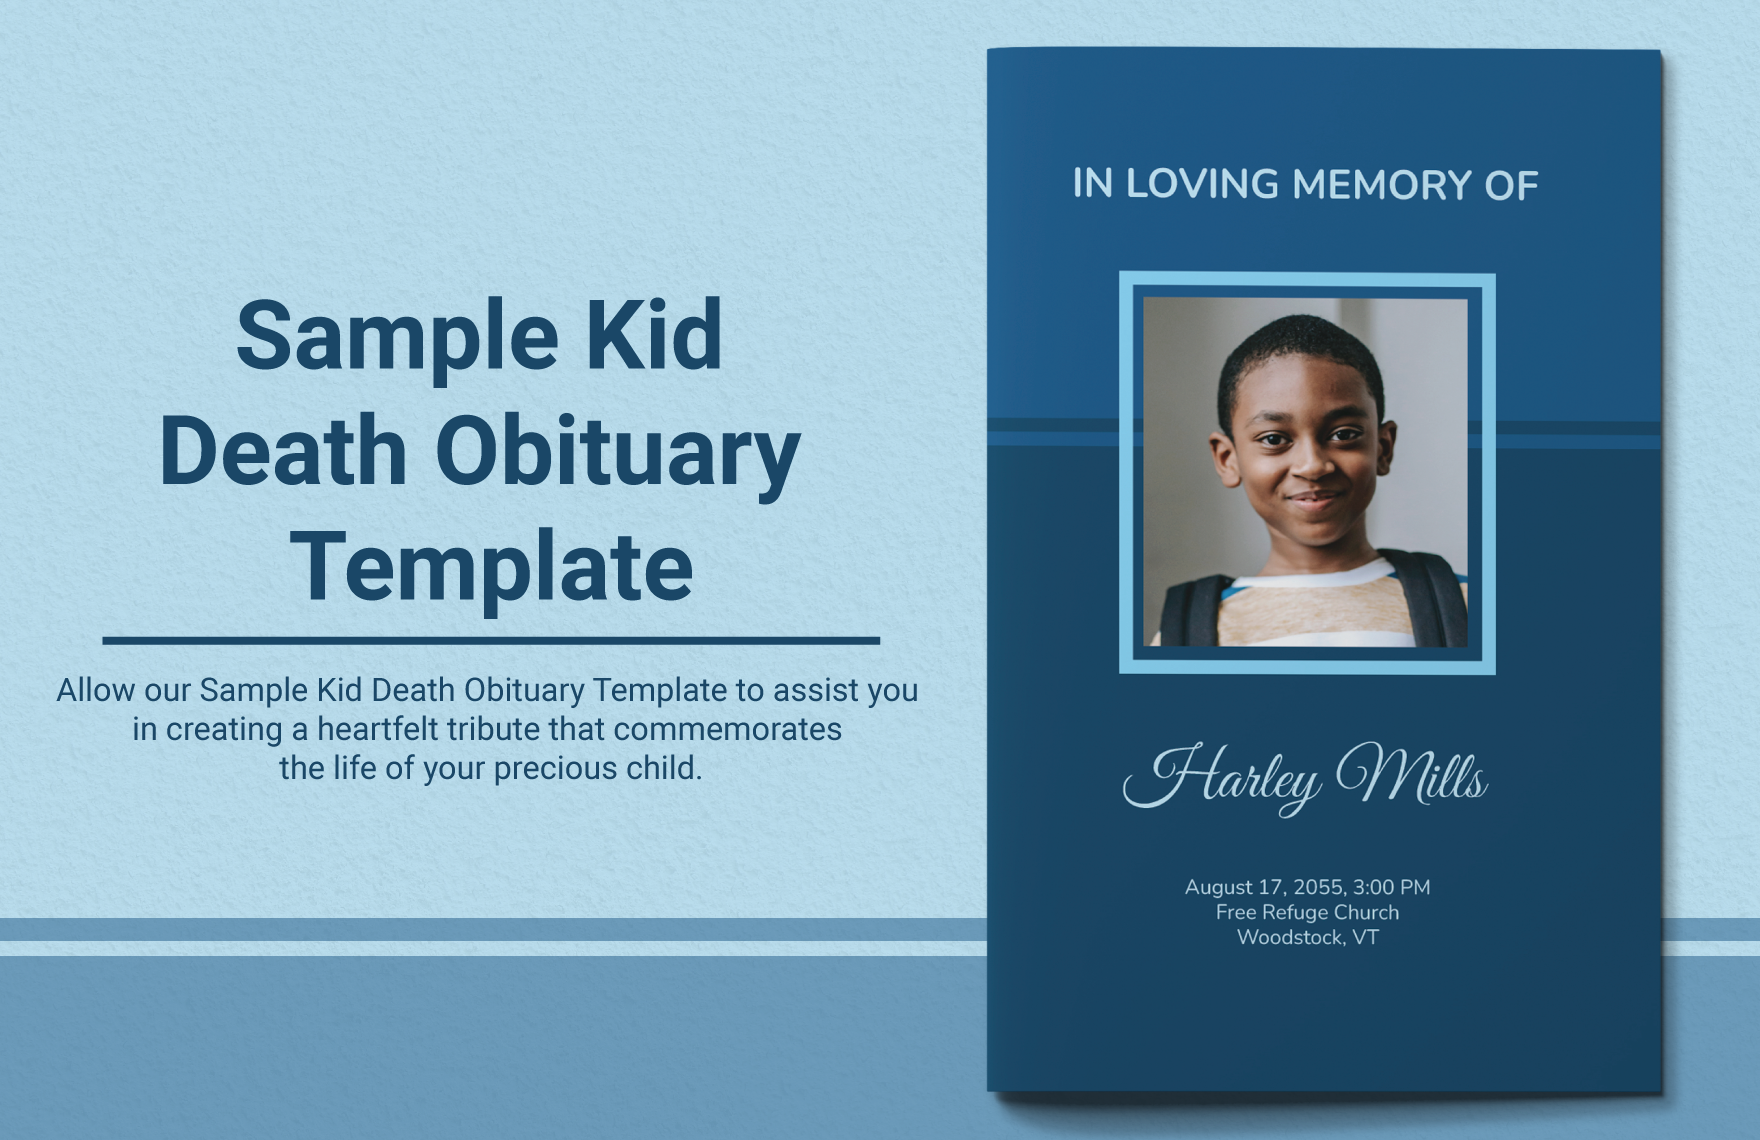 Sample Kid Death Obituary Template